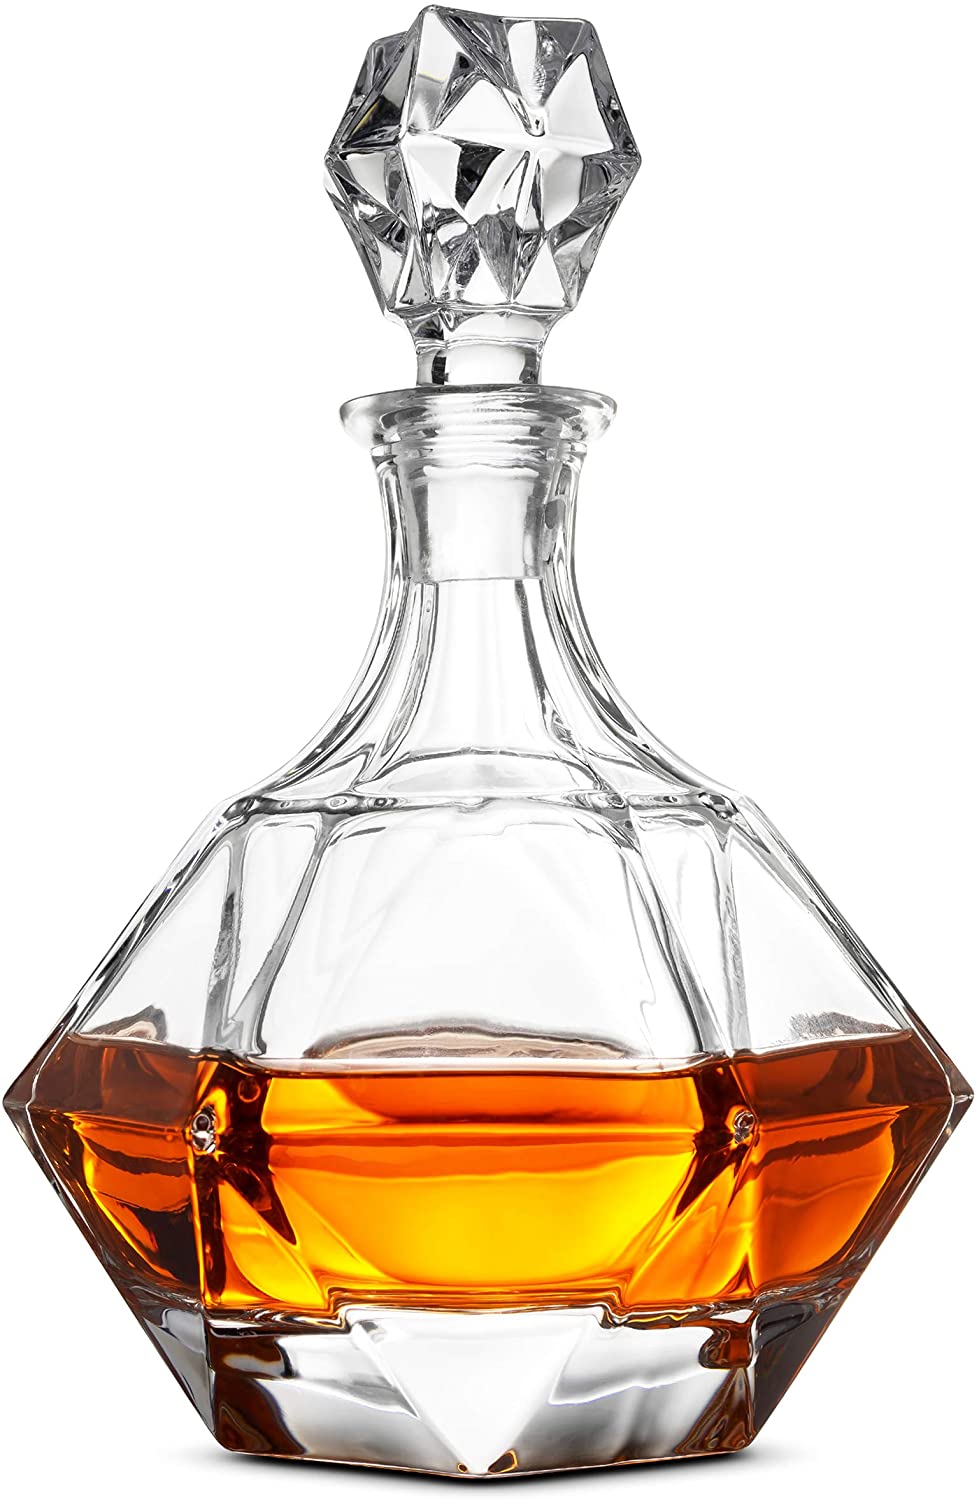 European Glass Liquor Decanter